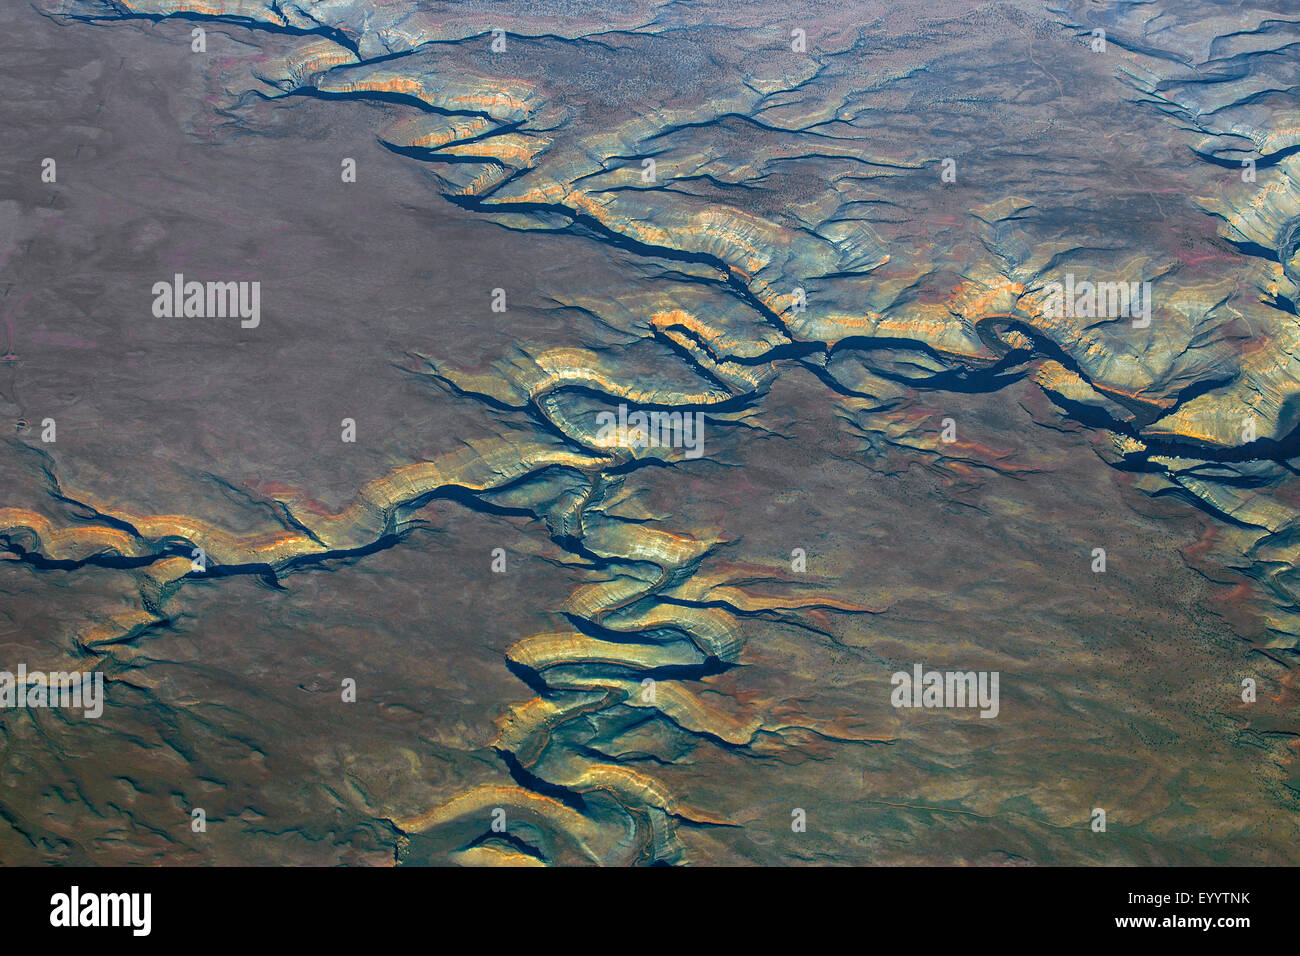 Colorado-Plateau, Grand Canyon, aerial view, USA Stock Photo